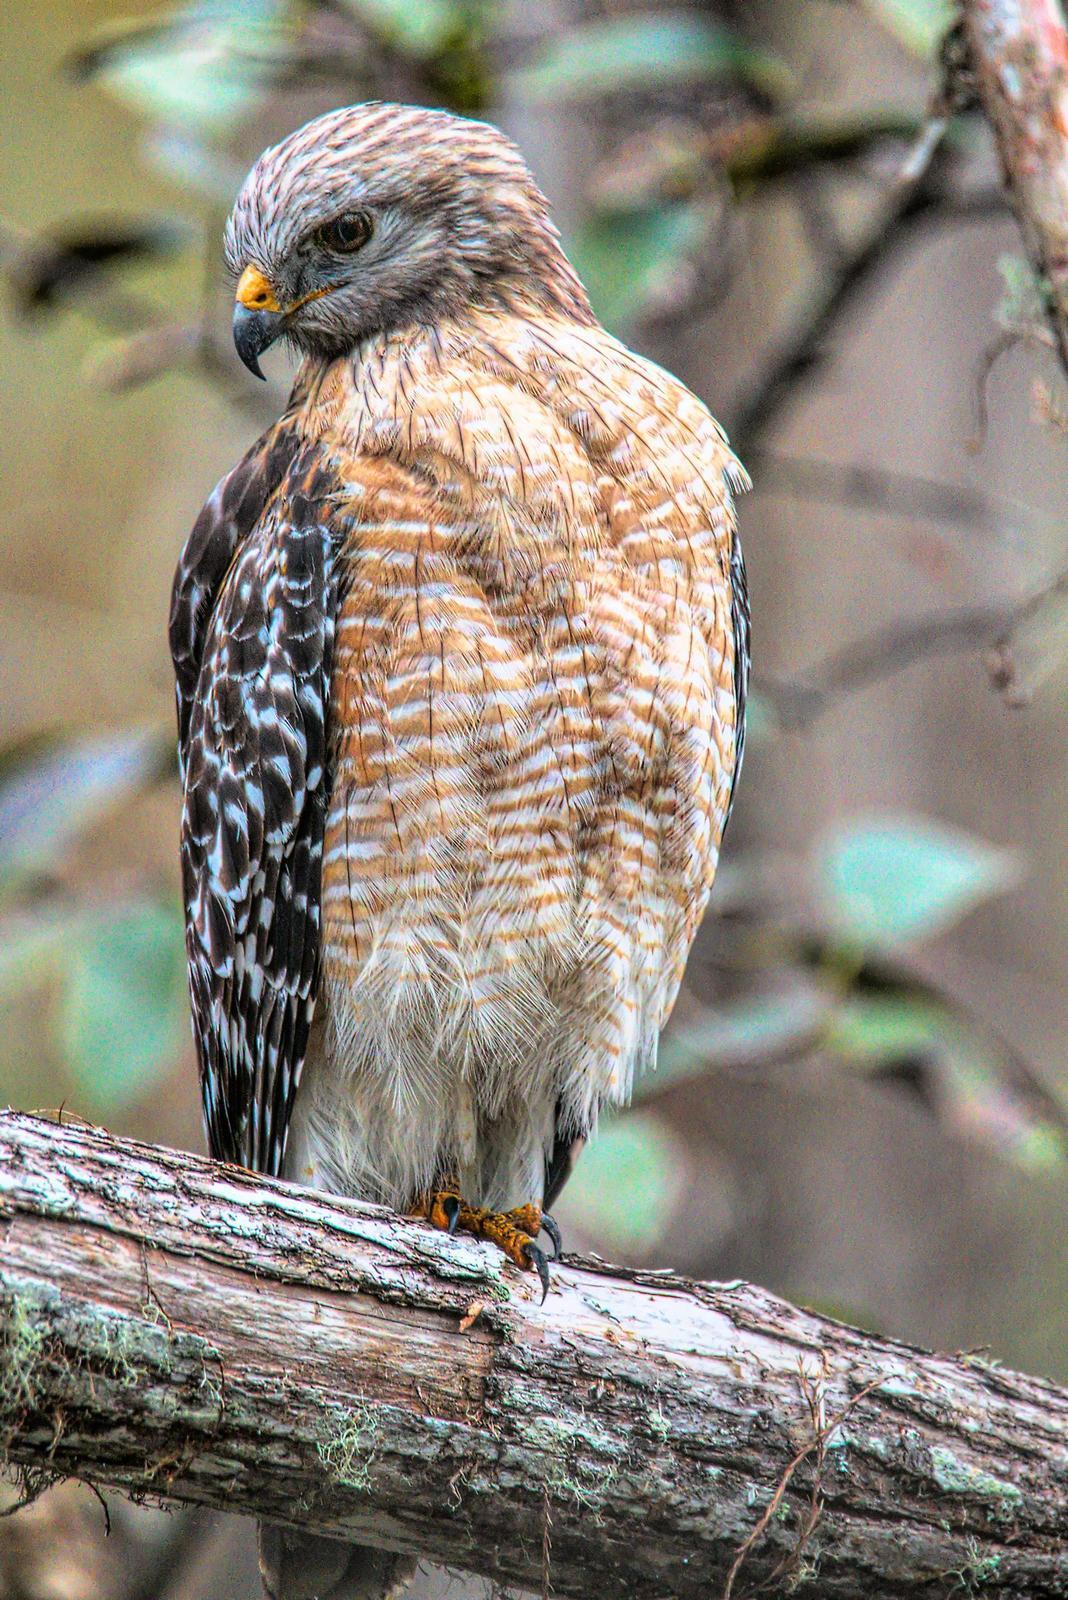 Red-shouldered Hawk Photo by Dan Tallman